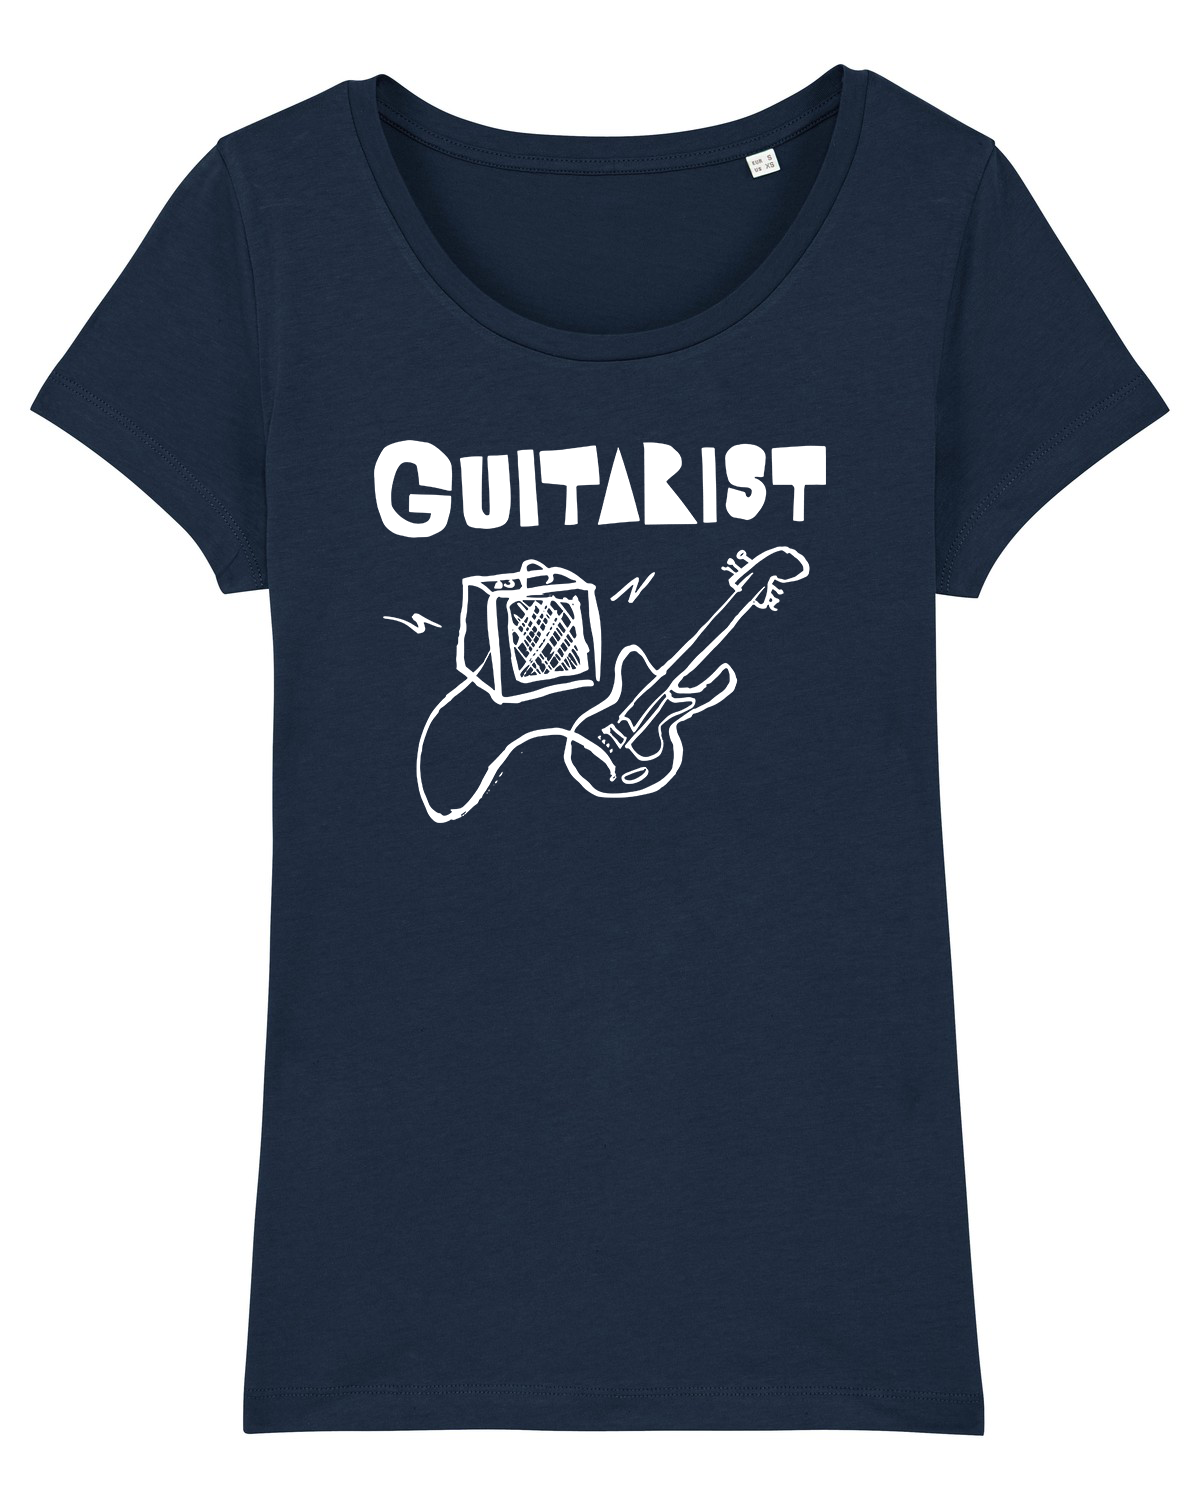 'Guitarist' Organic Womens T-shirt